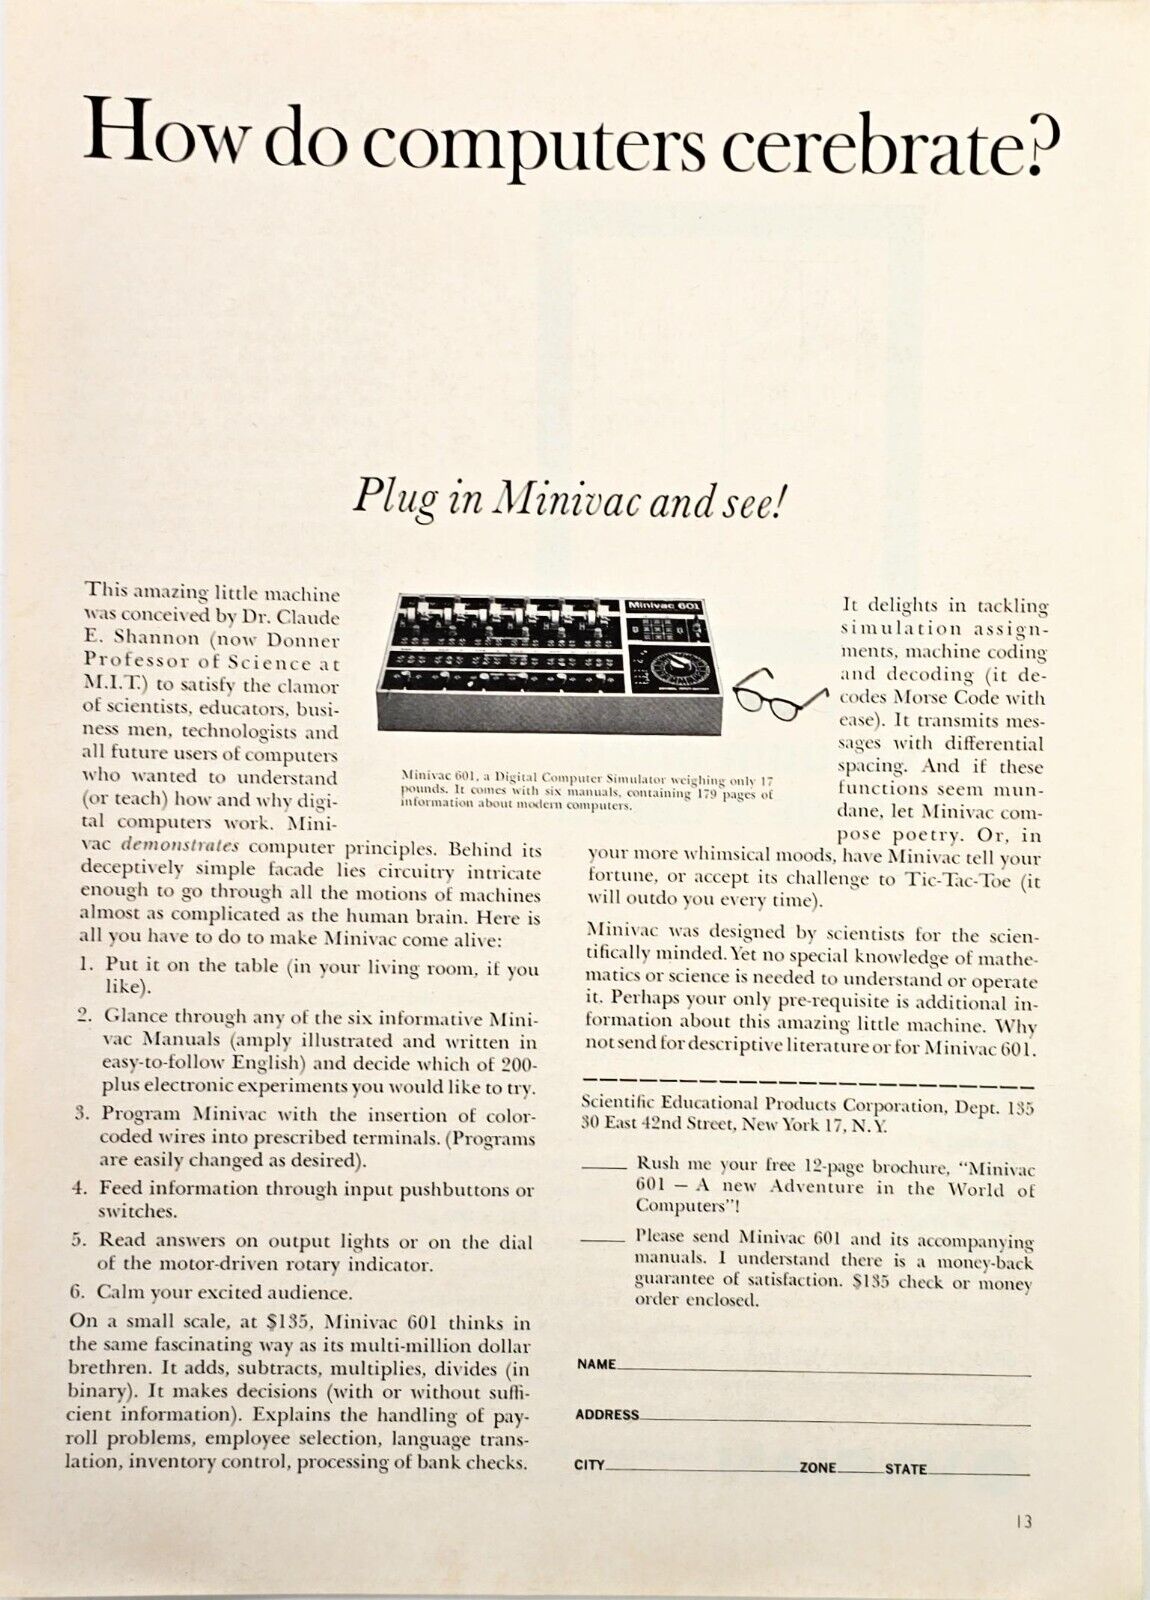 Minivac Digital Computer Simulator For Education Vintage 1963 Print Ad 8x11